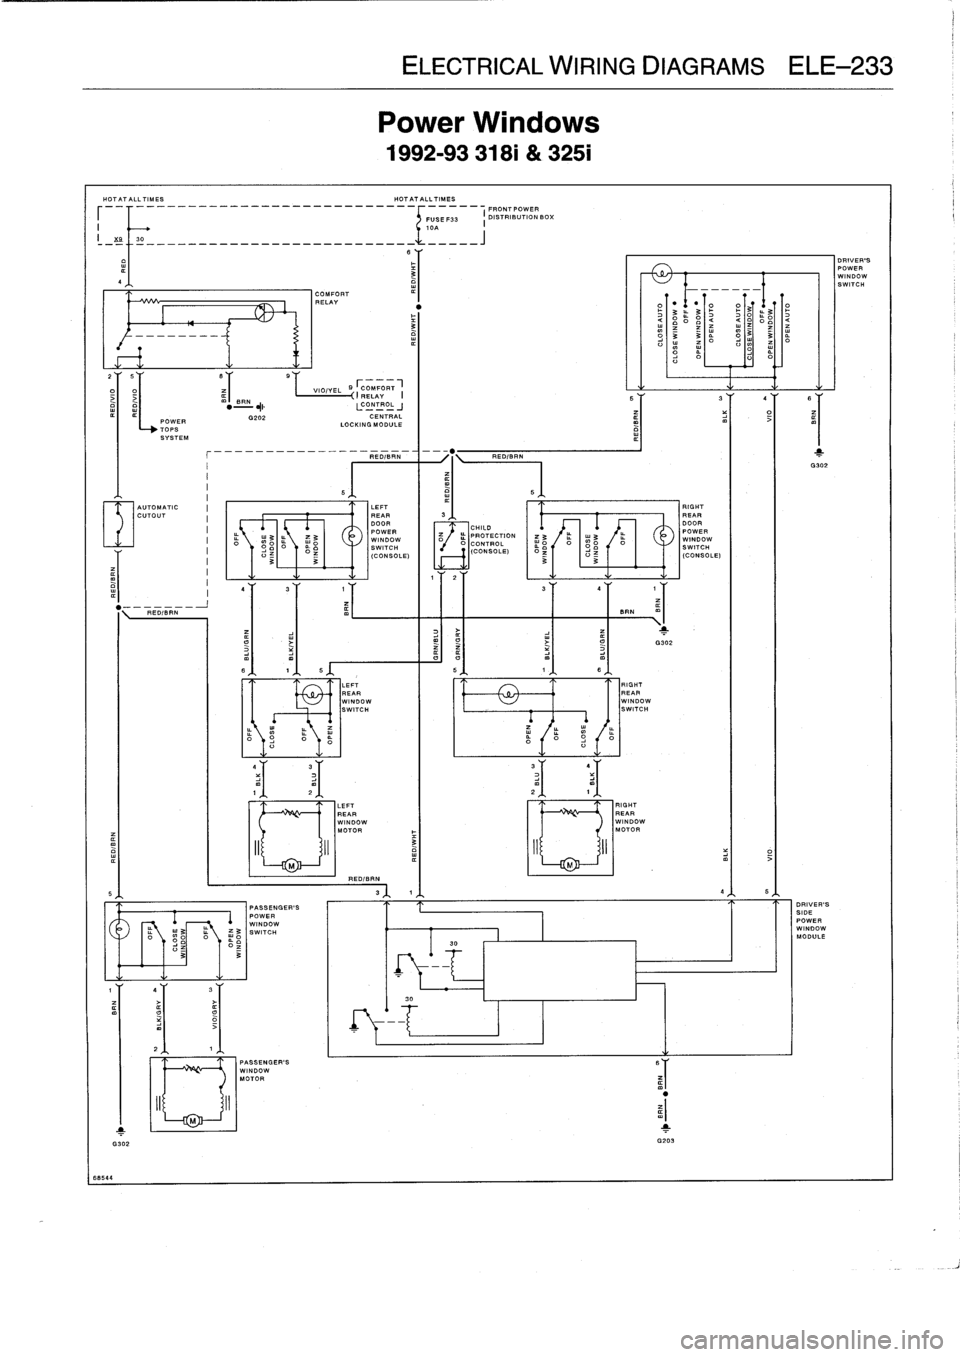 BMW 318i 1992 E36 Workshop Manual 
HO7A7AlL71ME5

	

HOTATALLTIMES

r
--

68544

i

*---AAA
POWER

AUTOMATIC
CUTOUT

O

PASSENGERS
WINDOWMOTOR

V
1
G3D2

B
r
COMFDRT~
VIOIYEL
(IRELAY
I

ELECTRICAL
WIRING
DIAGRAMS
ELE-233

Power
Windo